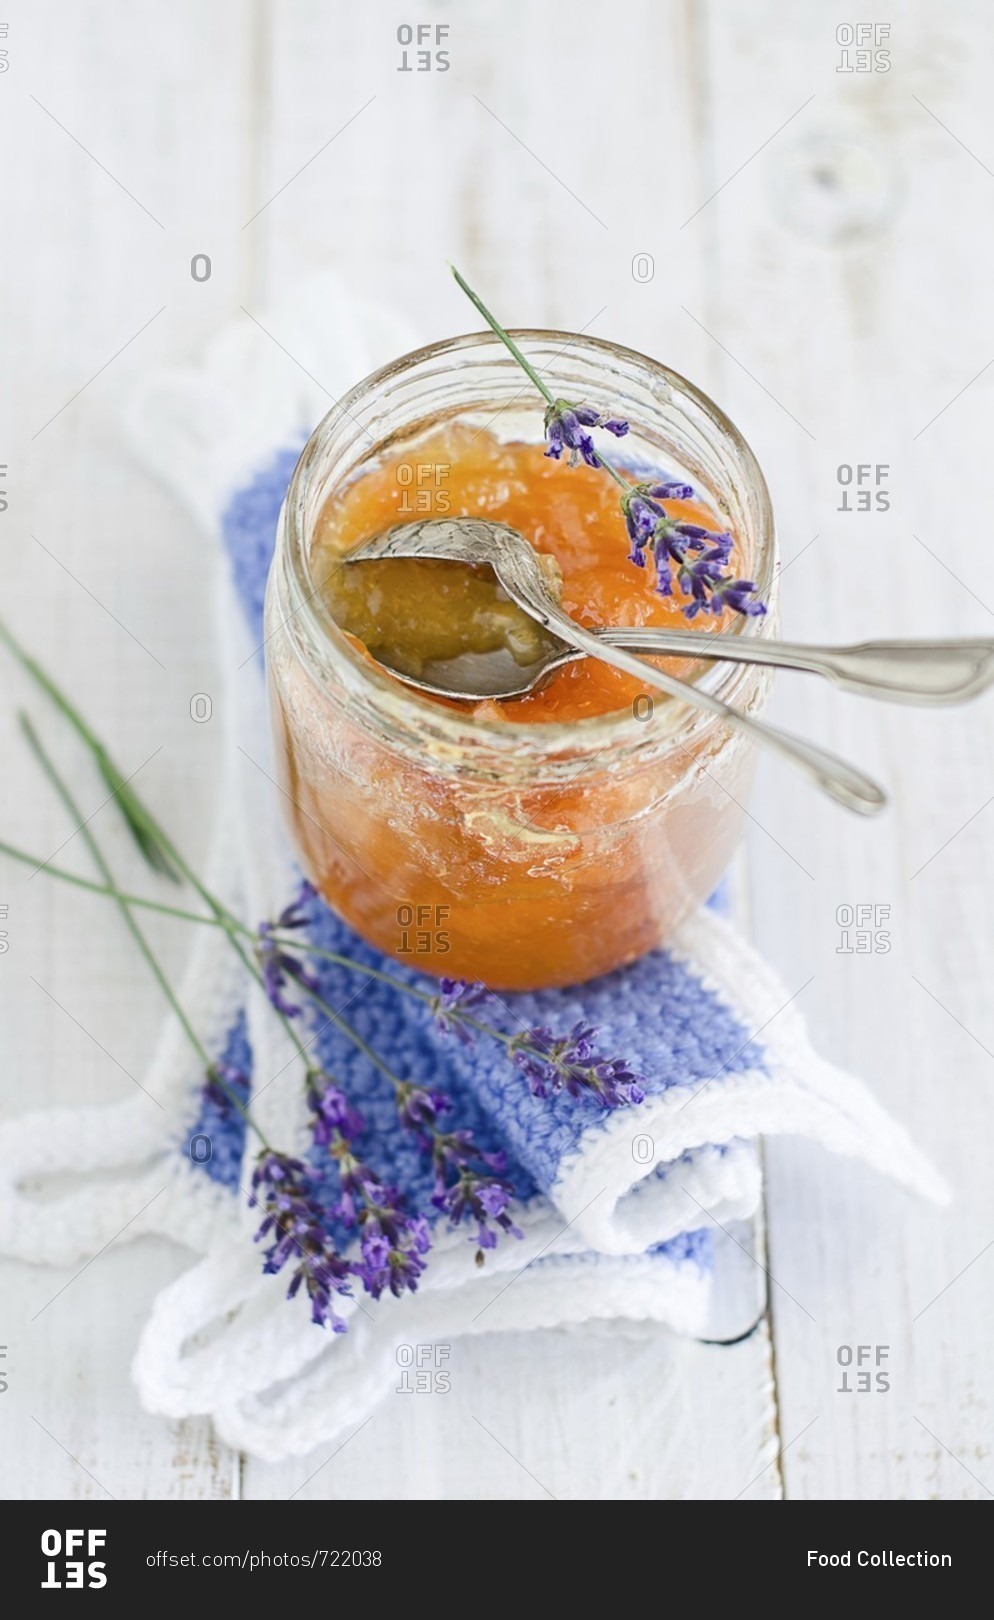 Melon jam with lavender flowers